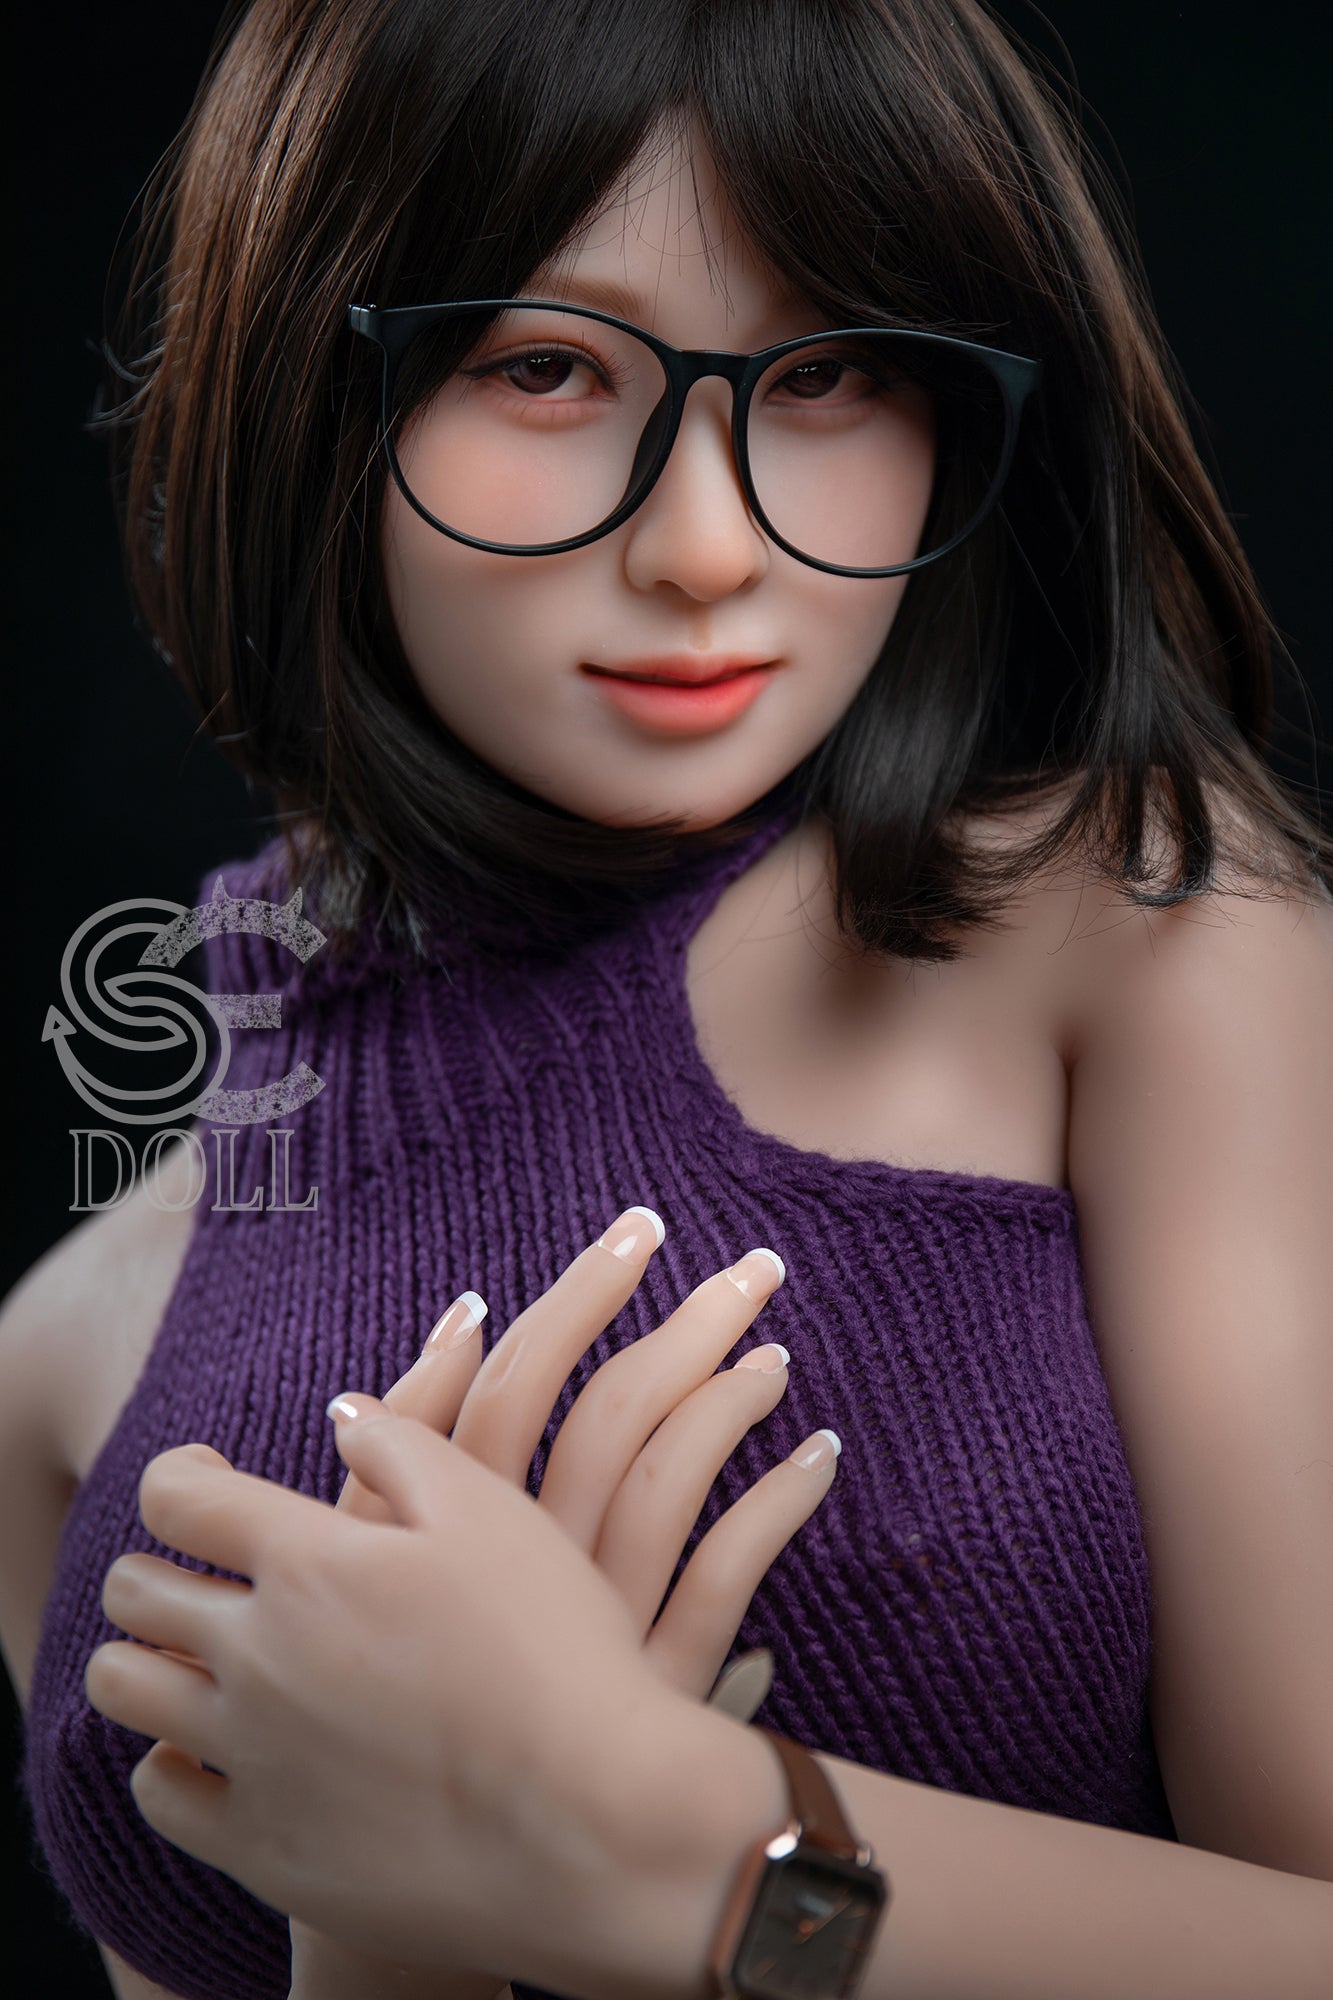 SEDOLL 163 cm E TPE - Yutsuki | Buy Sex Dolls at DOLLS ACTUALLY